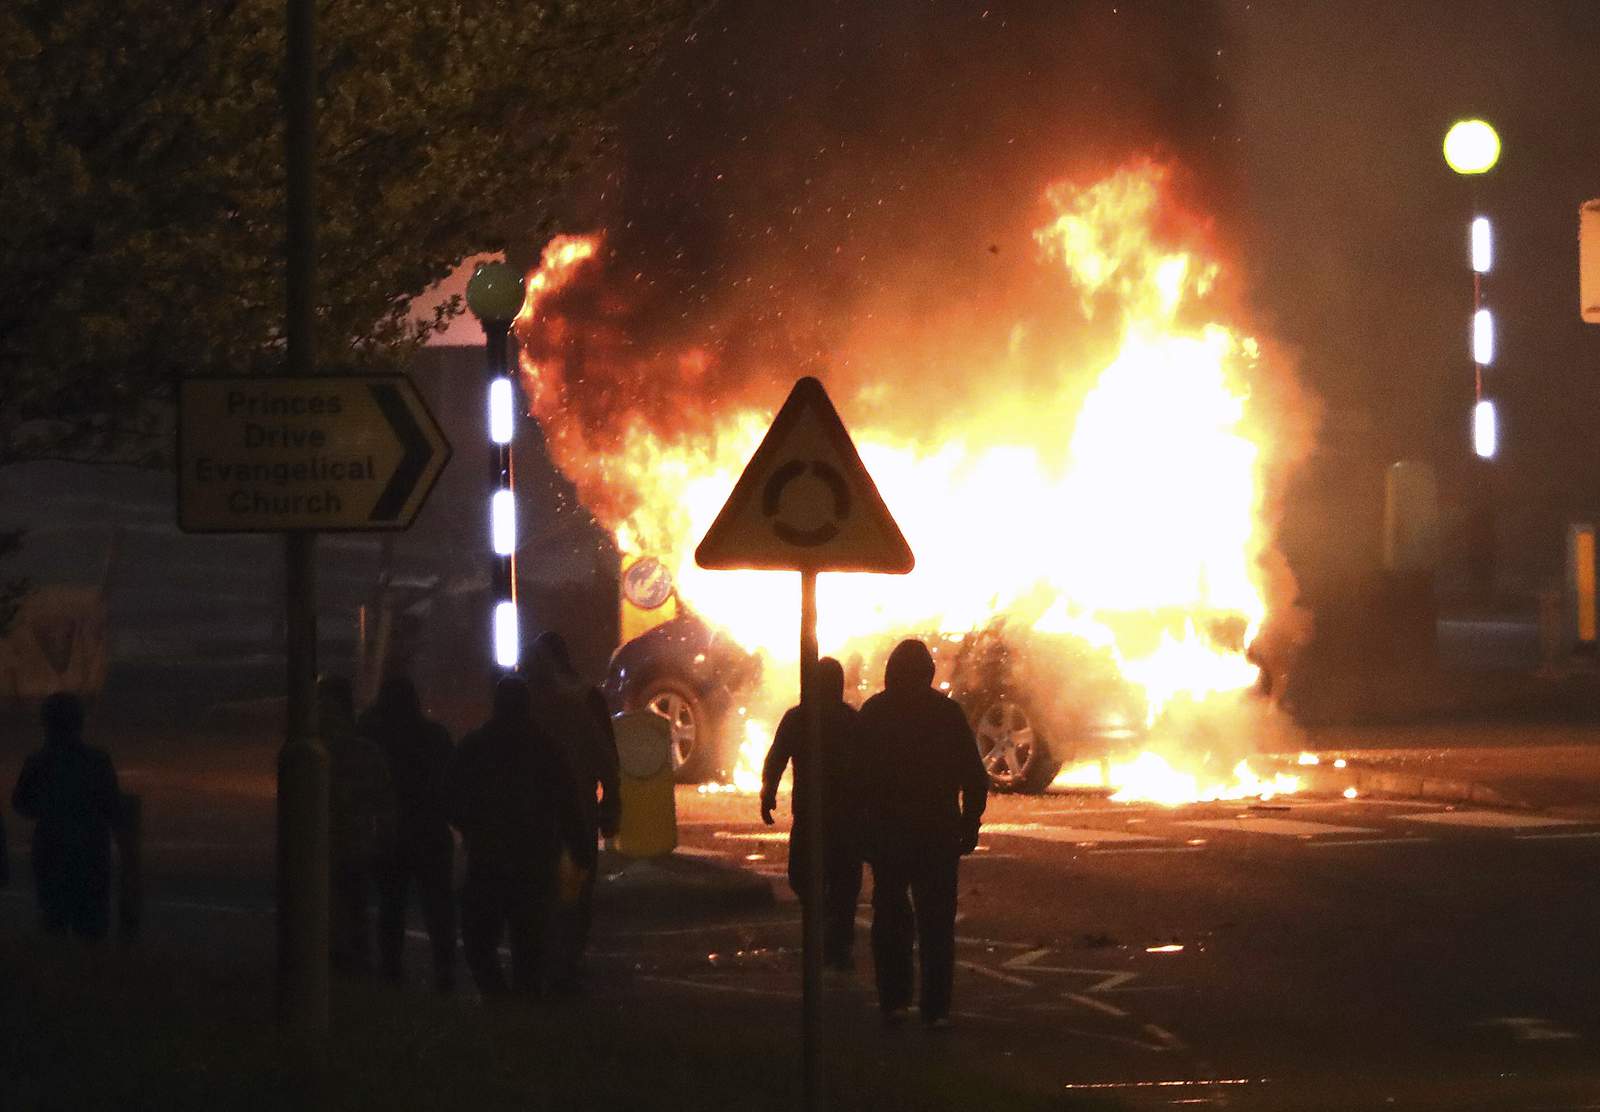 Northern Ireland police appeal for calm after violent unrest